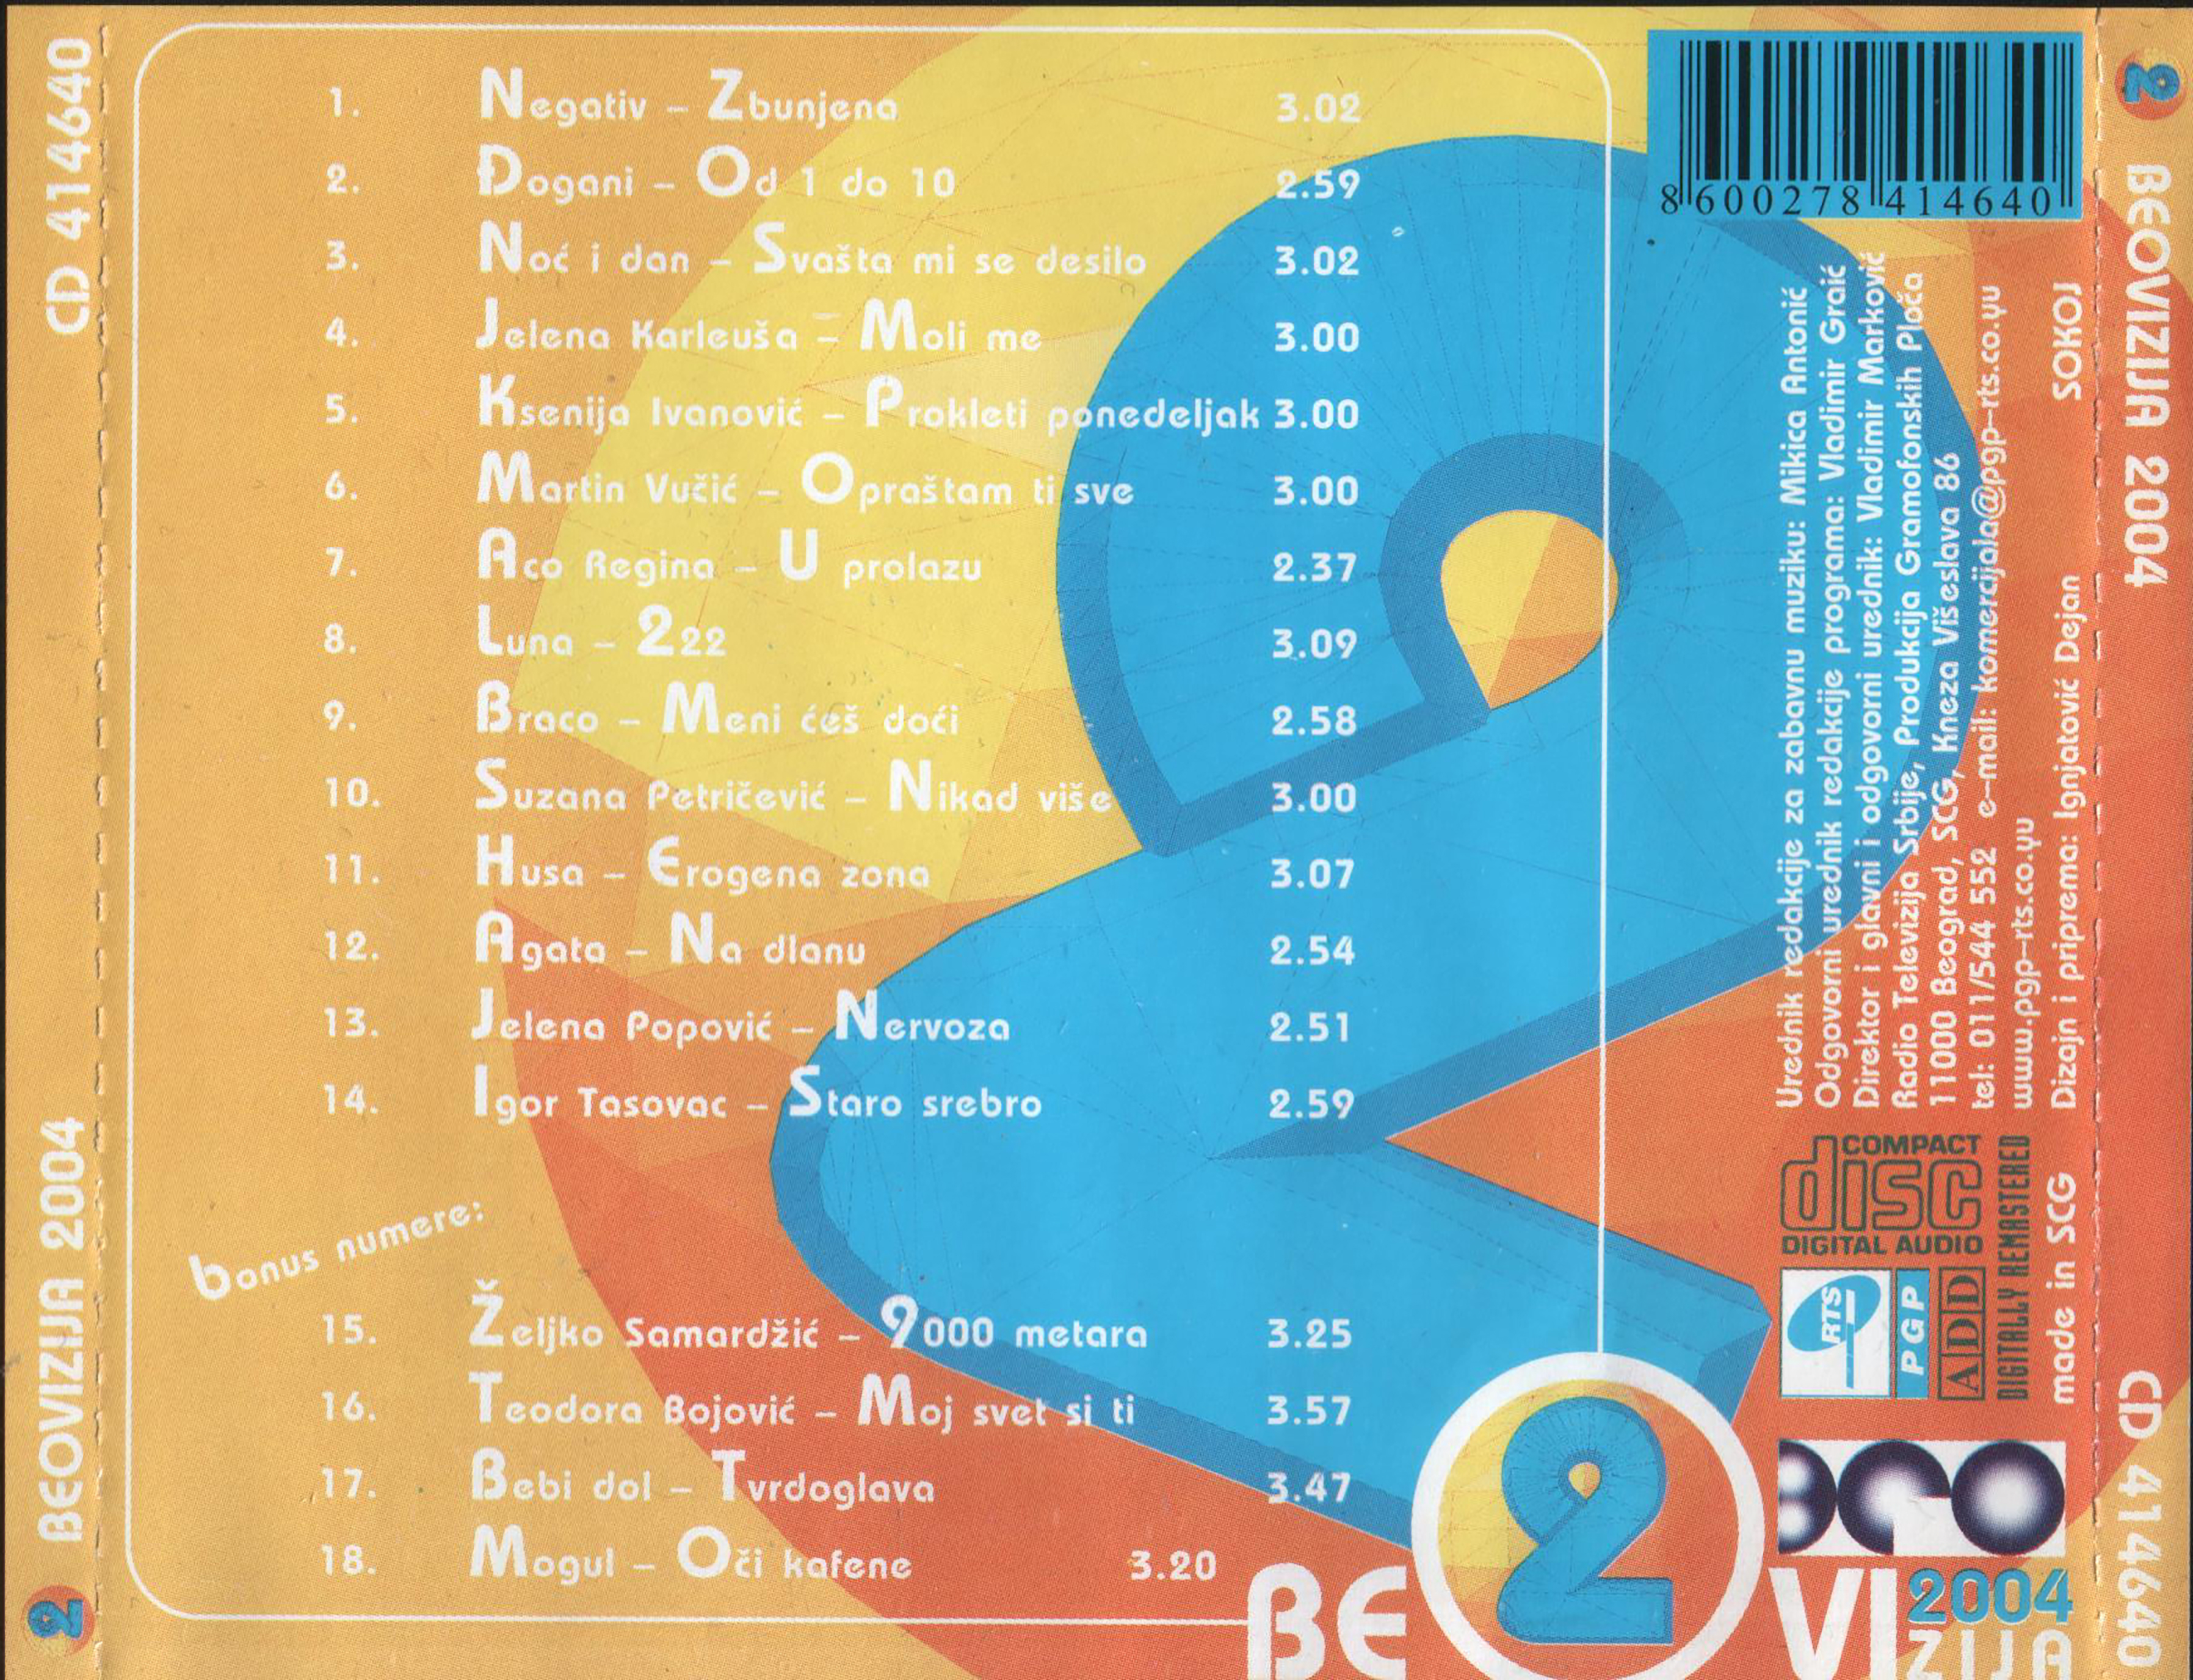 Beovizija 2004 CD 2 3